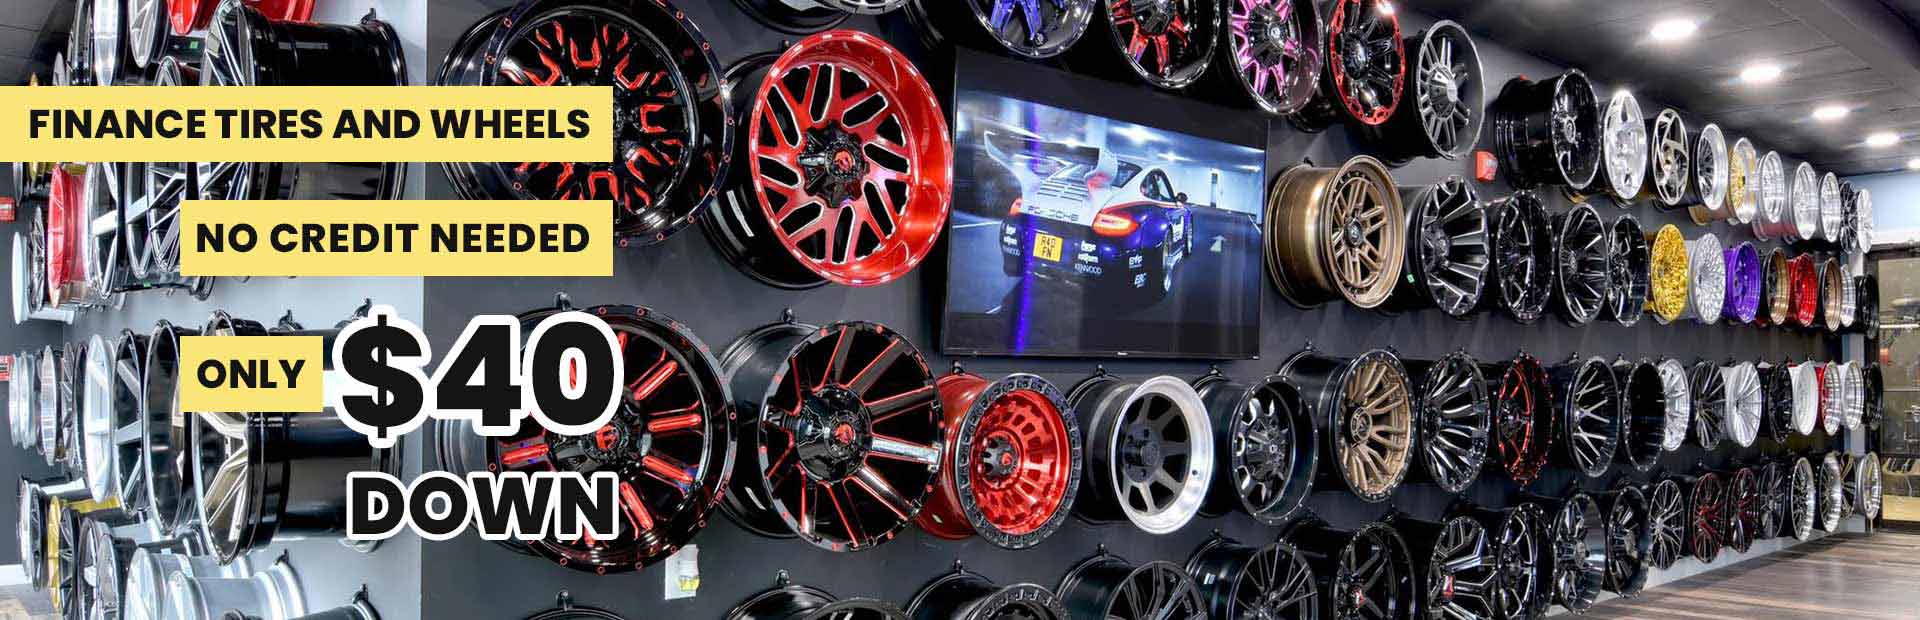 Finance Tires Wheels